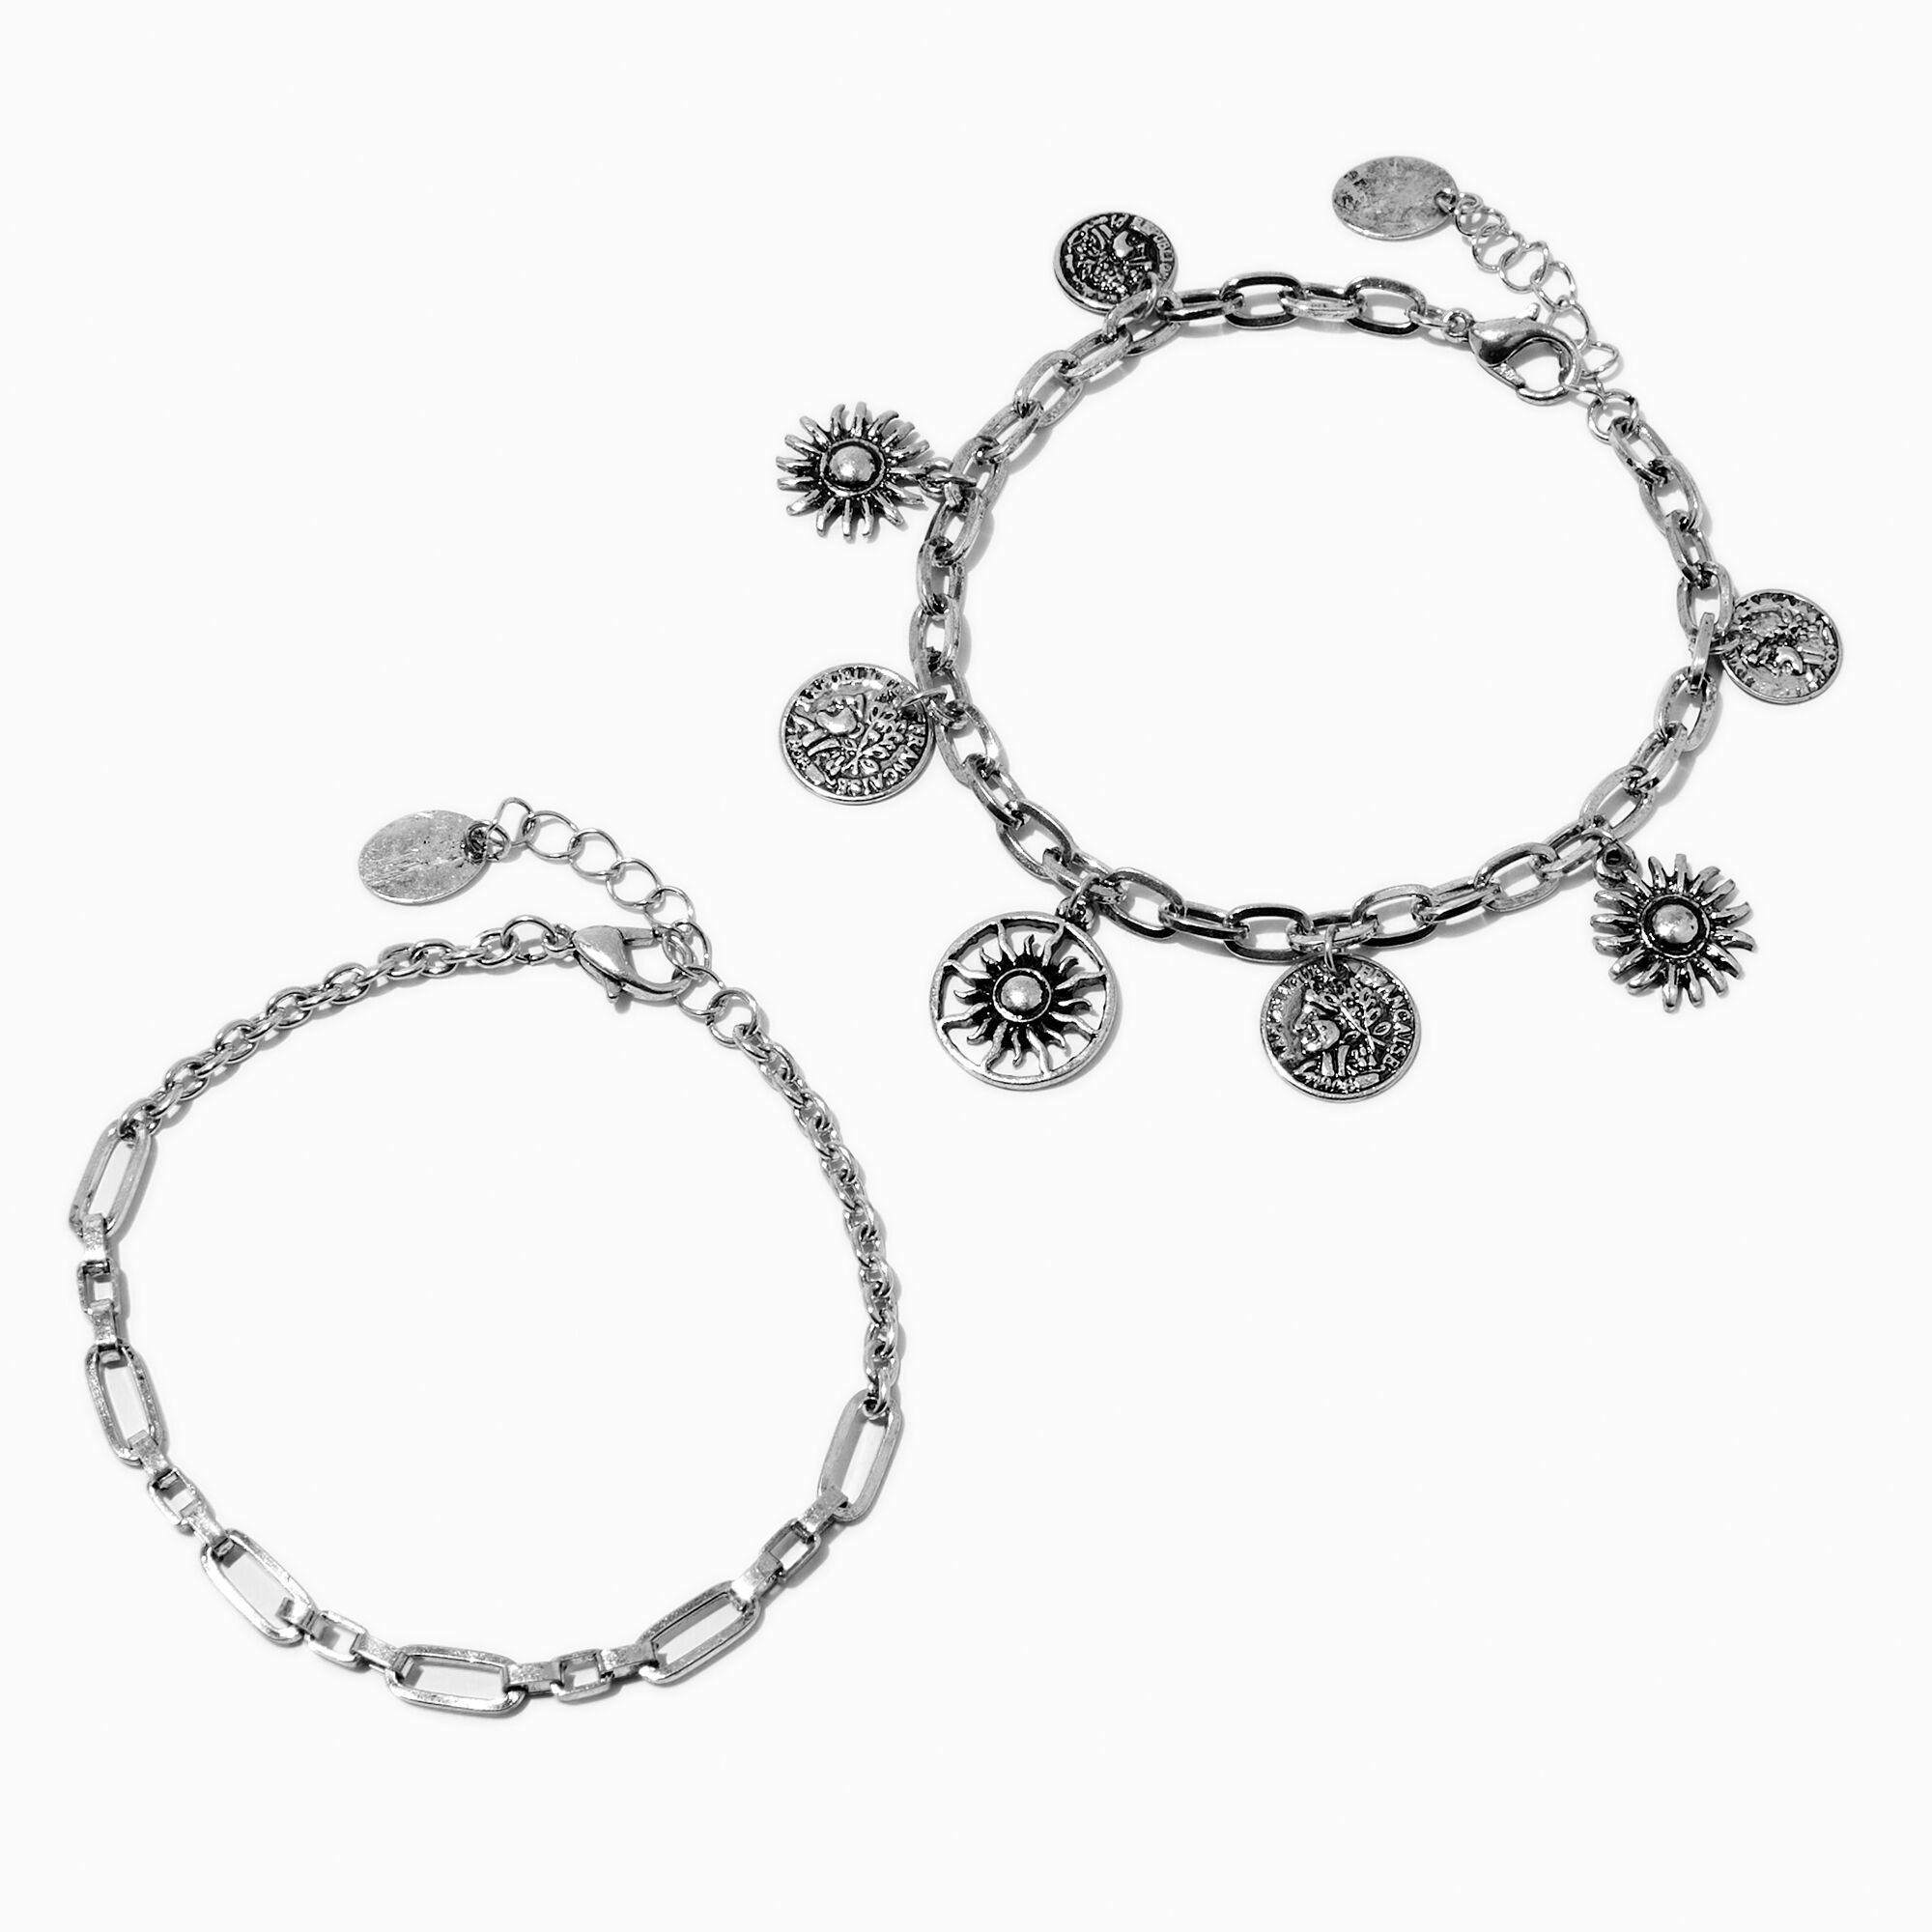 View Claires Tone Boho Charm Bracelets 2 Pack Silver information